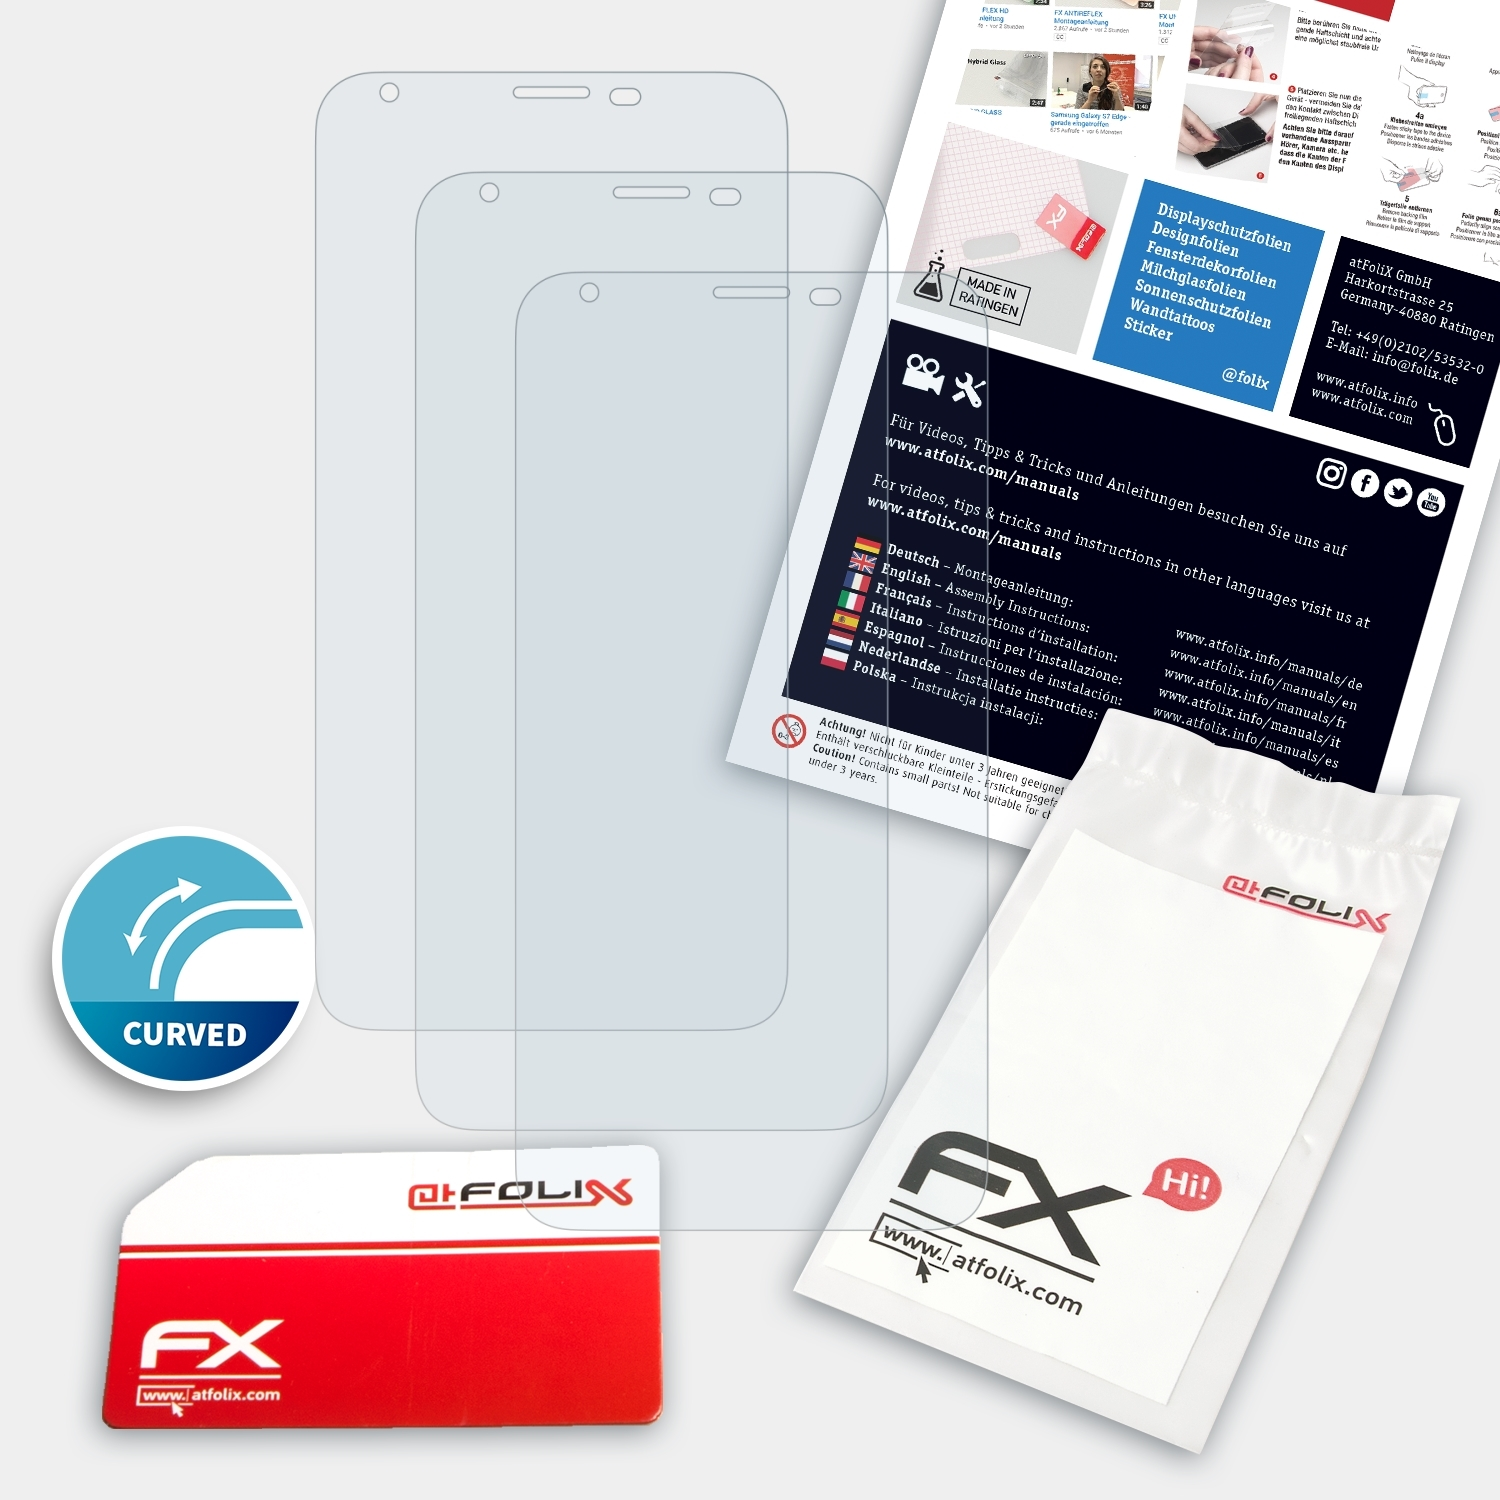 ATFOLIX 3x FX-ActiFleX V30) LG Displayschutz(für